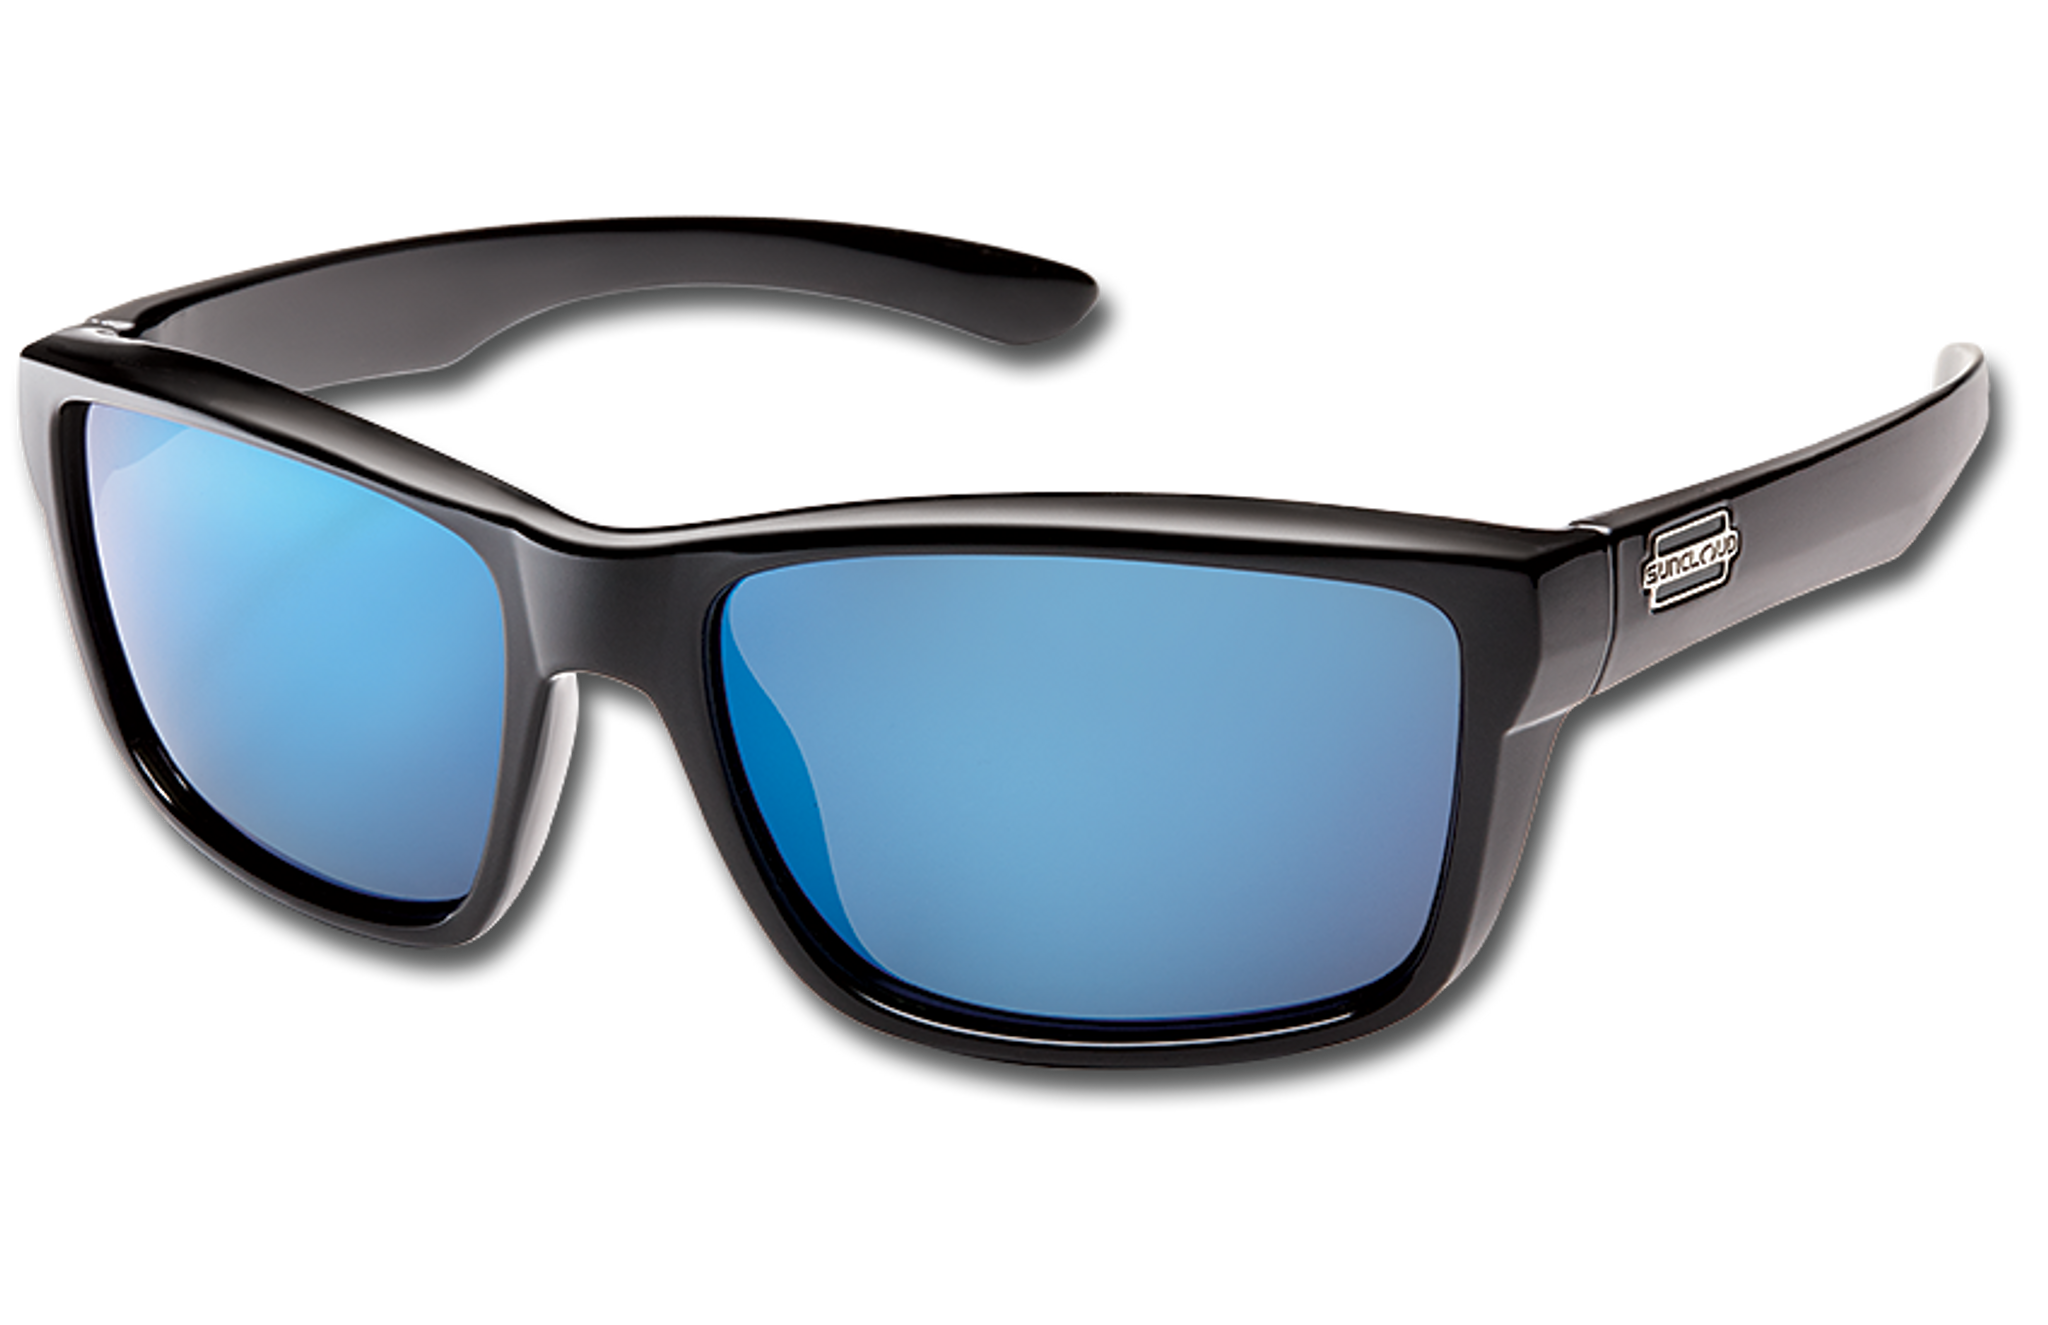 Blue Mirrored Polarized Sunglasses - Round Lens